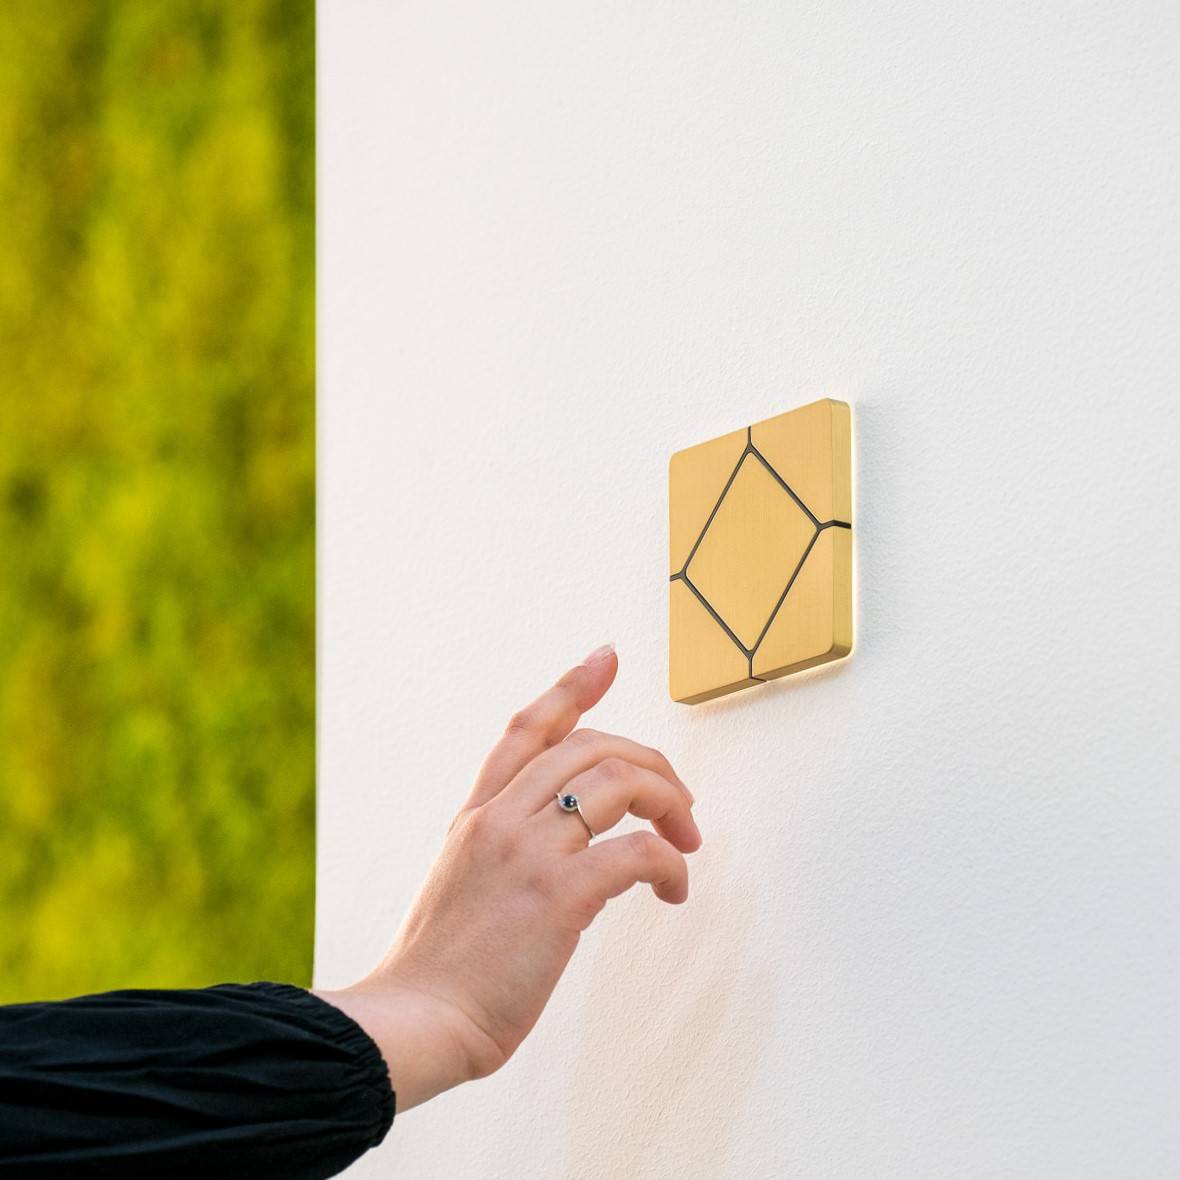 Faradite TAP-5 smart home light switch on decorative wall